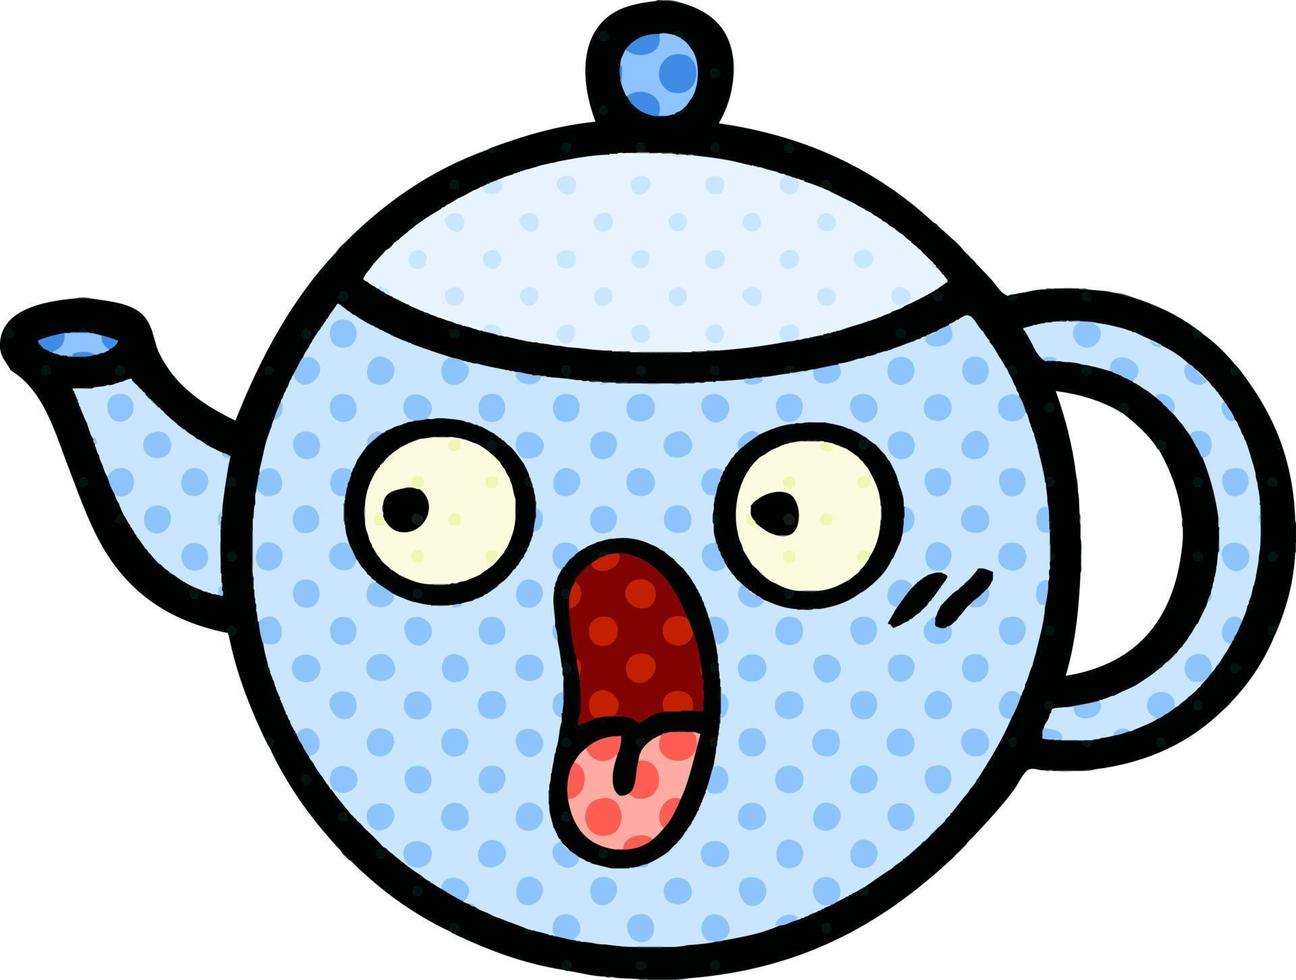 https://static.vecteezy.com/system/resources/previews/008/747/281/non_2x/comic-book-style-cartoon-teapot-vector.jpg